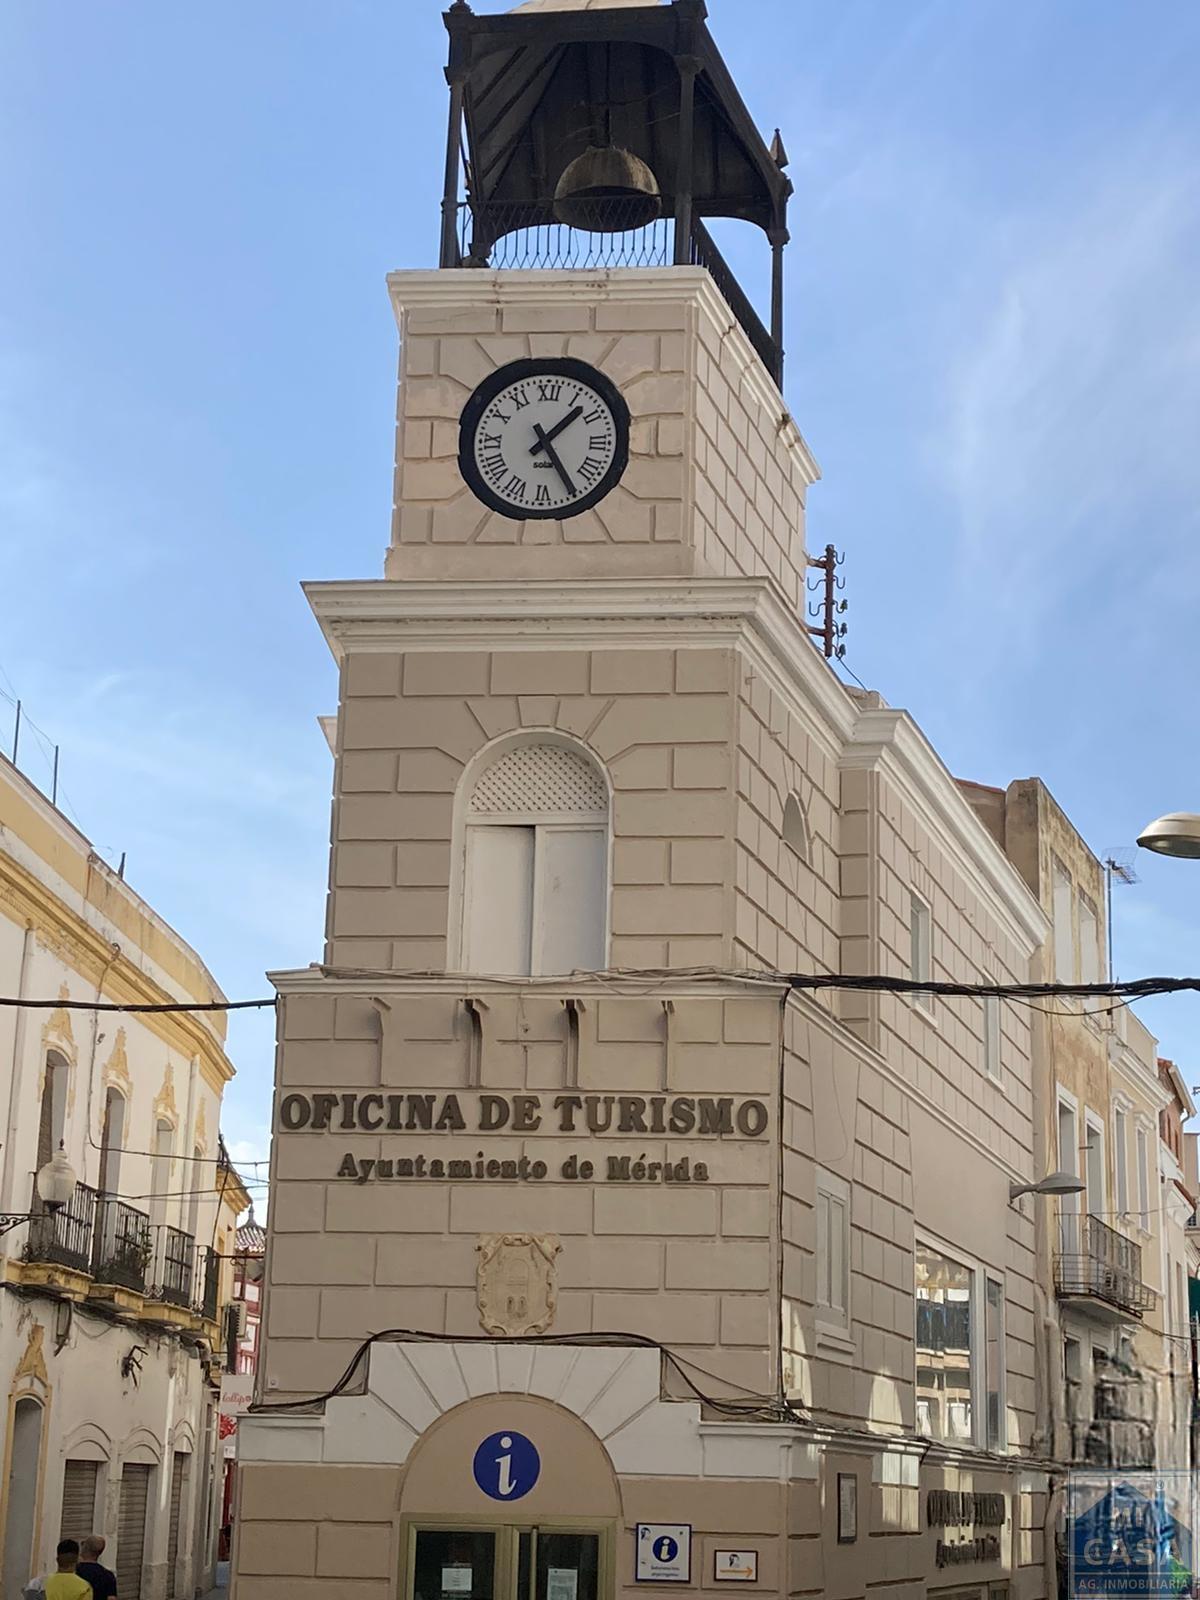 Alquiler de local comercial en Mérida